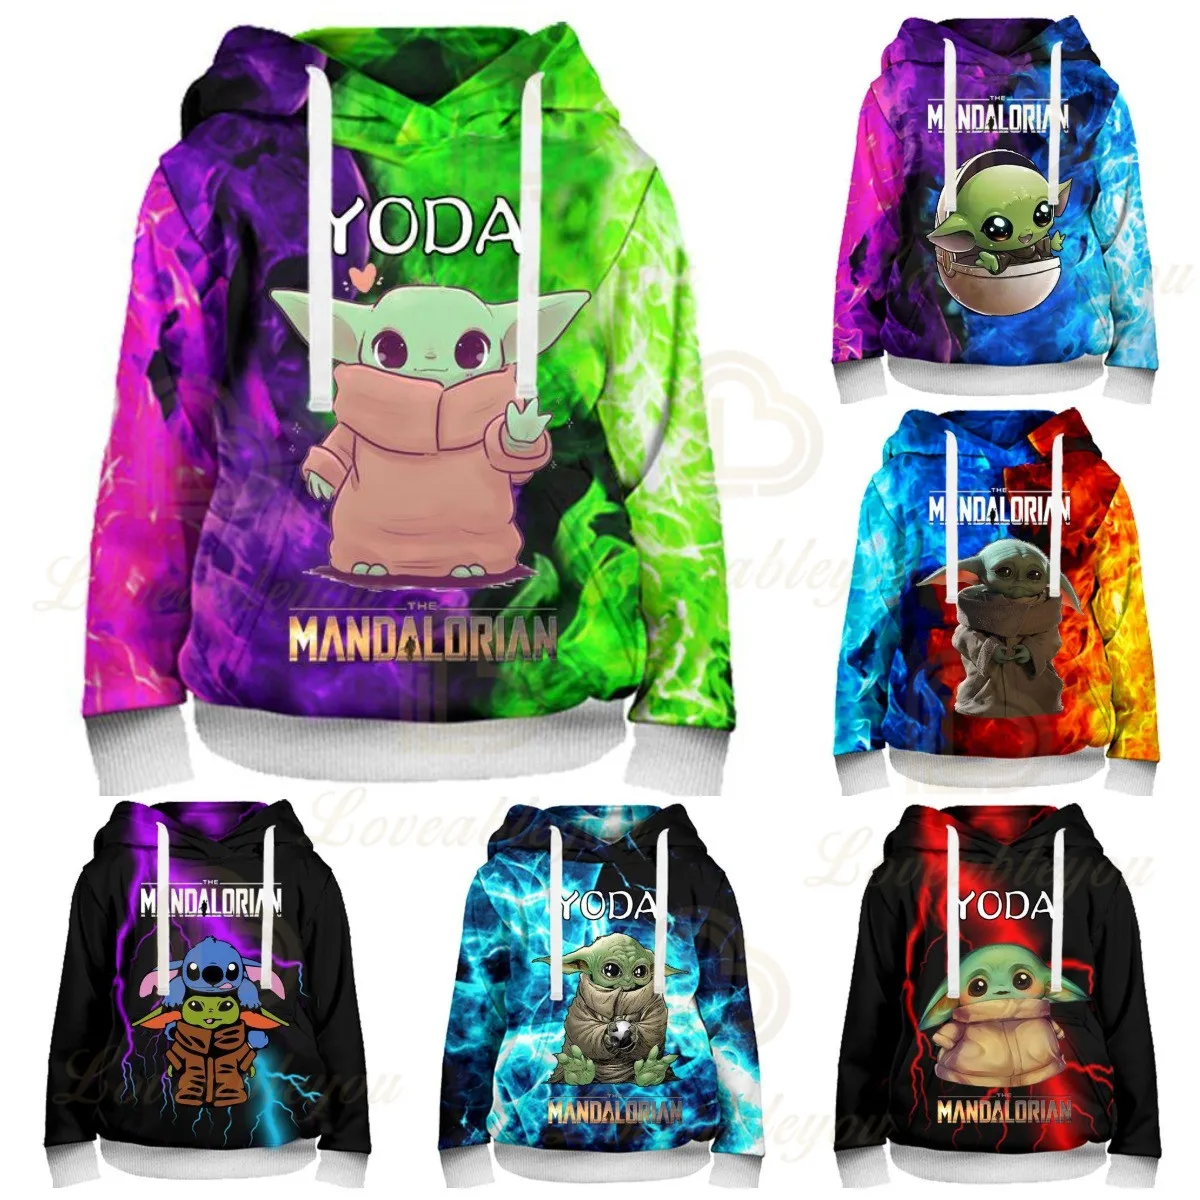 

Cartoon Disney Baby Yoda Mandalorian 3 To 14 Years Kids Hoodies 3D Printed Sweatshirt Boys and Girls Jacket Tops Teen Clothes